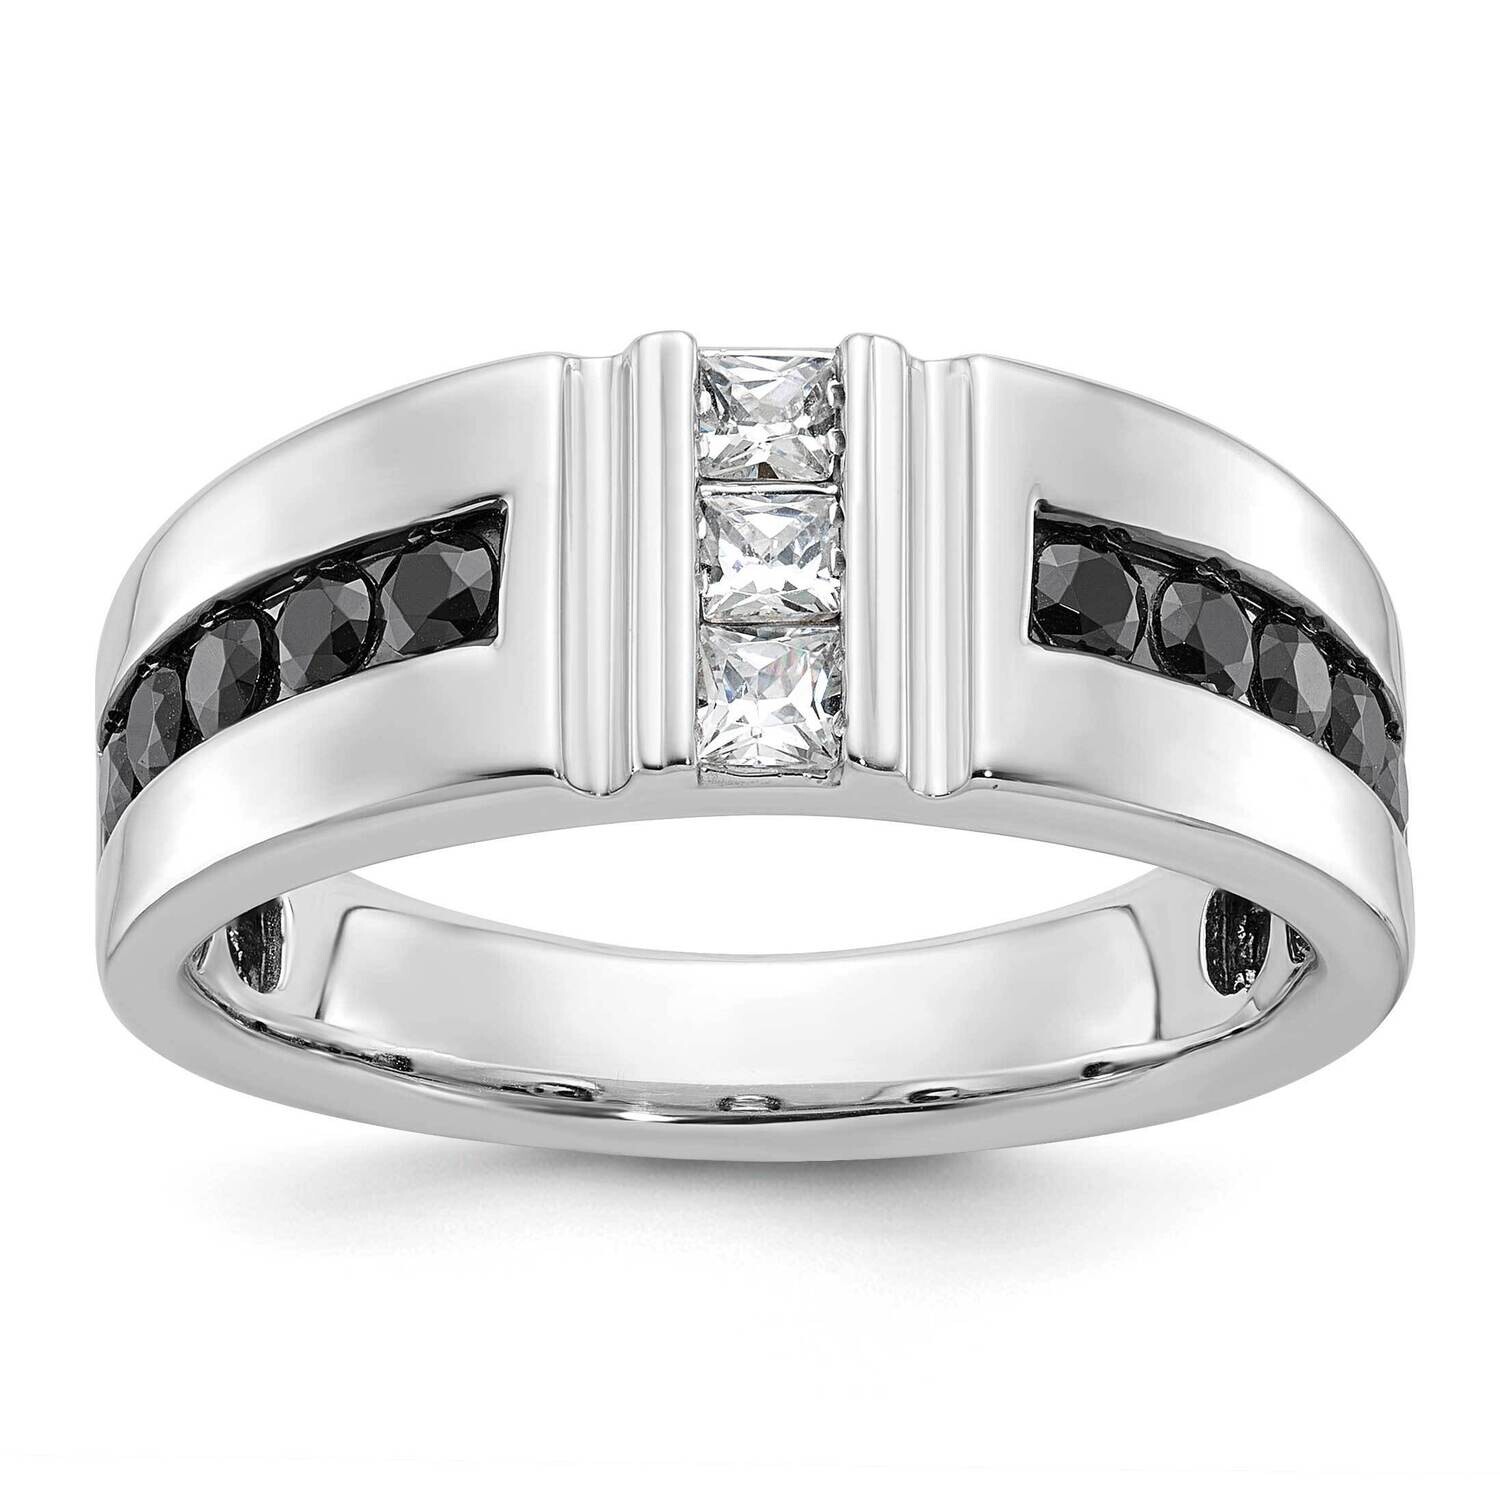 Ibgoodman Men's Polished Grooved Black White 1 Carat Aa Quality Diamond Ring 14k White Gold B64186-4WAA